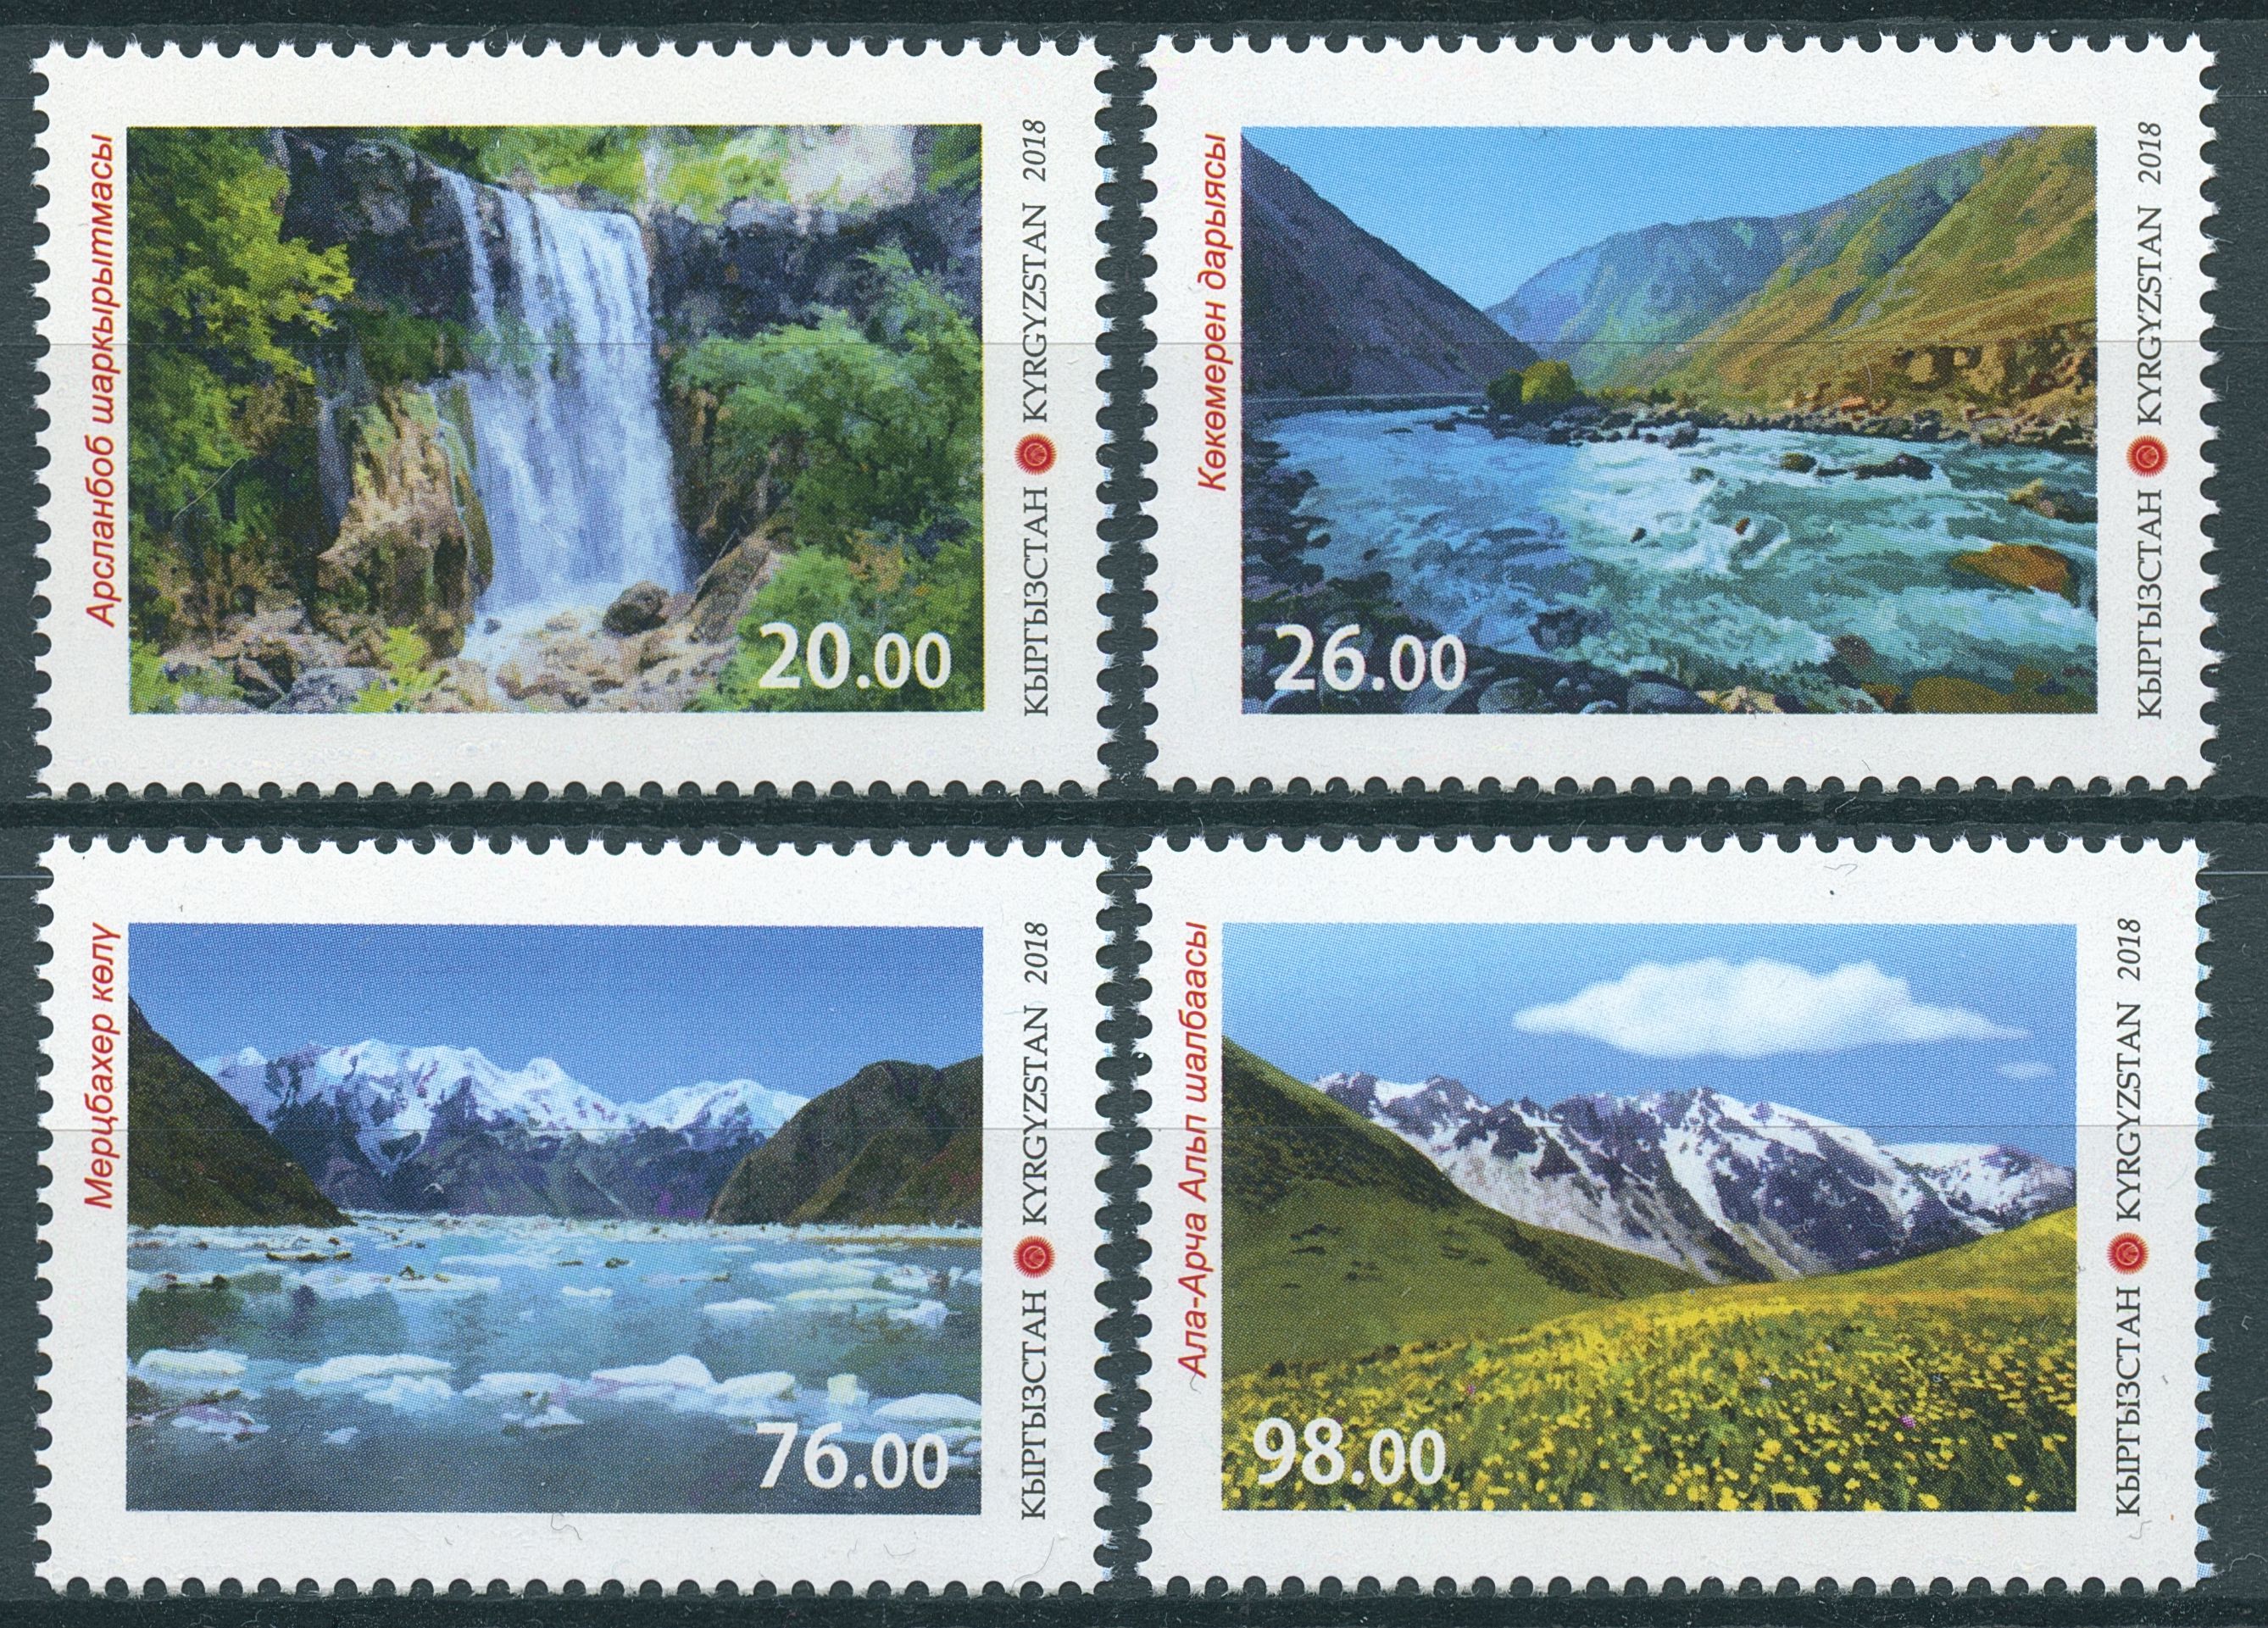 Kyrgyzstan 2018 MNH Landscapes 4v Set Tourism Waterfalls Mountains Nature Stamps